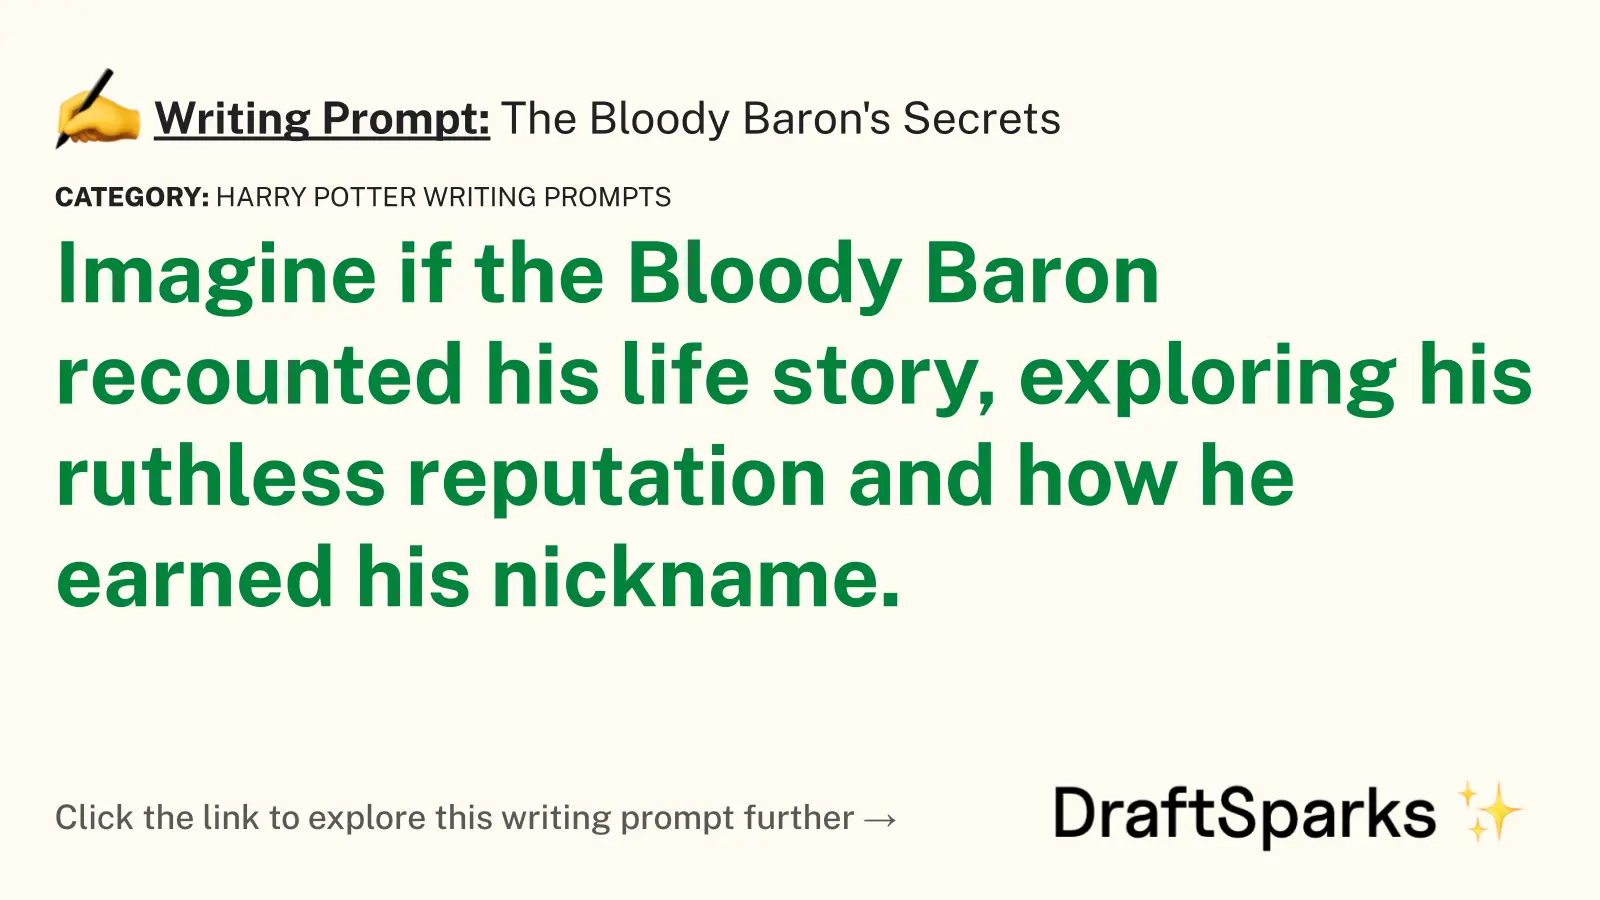 The Bloody Baron’s Secrets